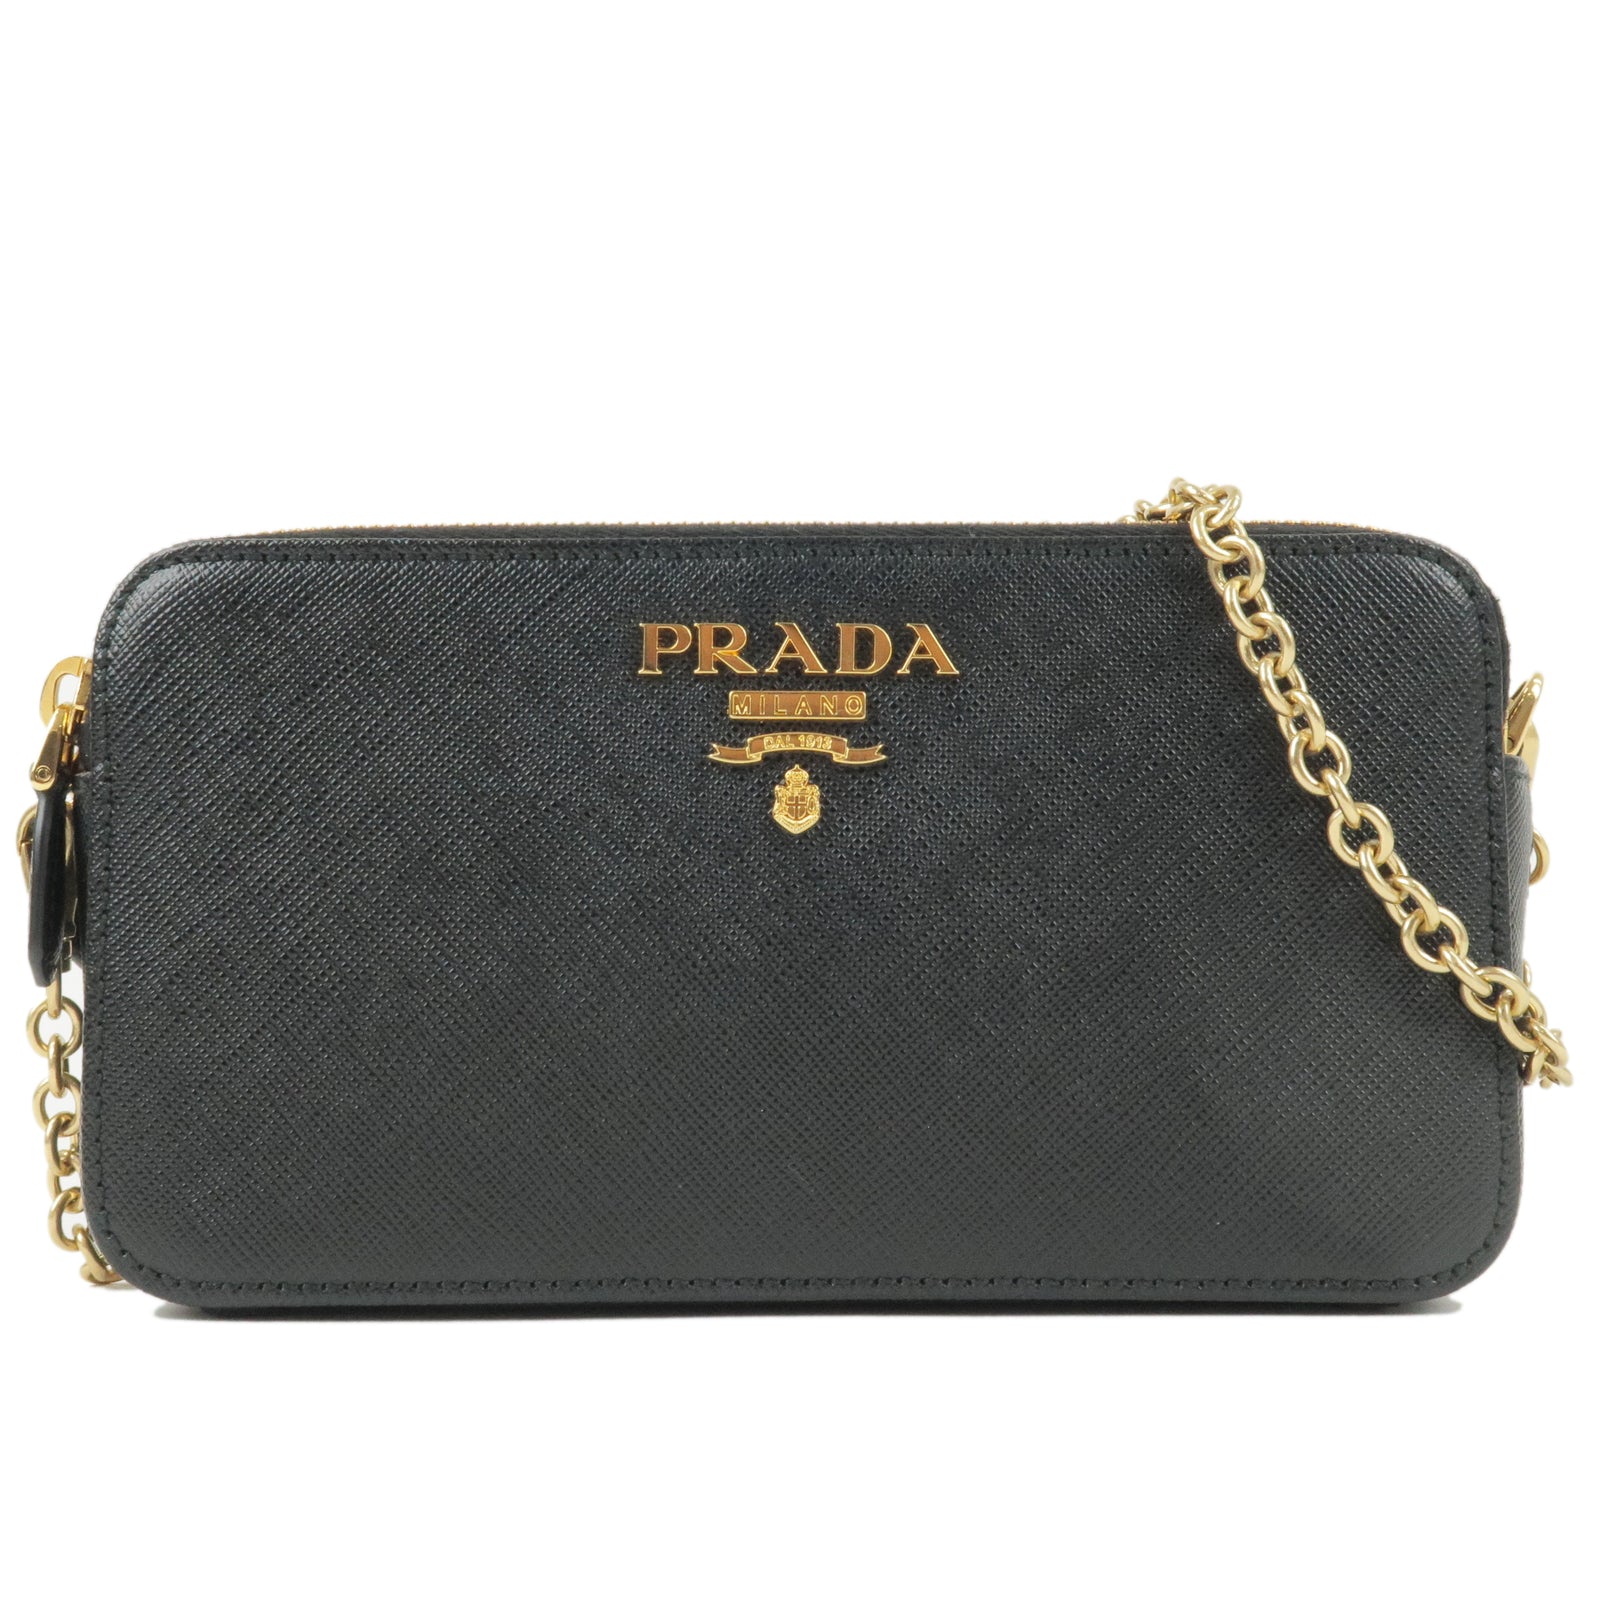 Prada woc (wallet on chain).  Bags, Crossbody wallet, Prada wallet